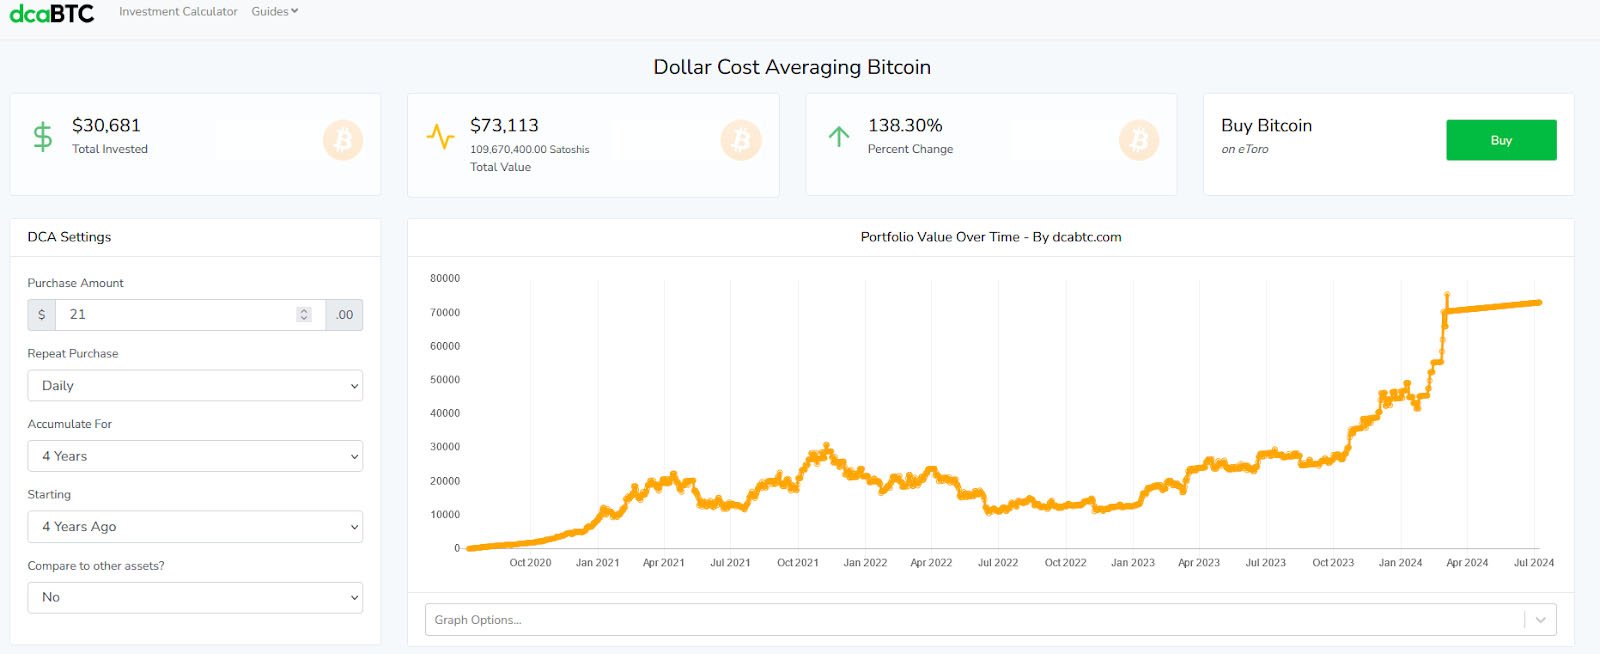 dcaBTC bitcoin dollar cost average calculator